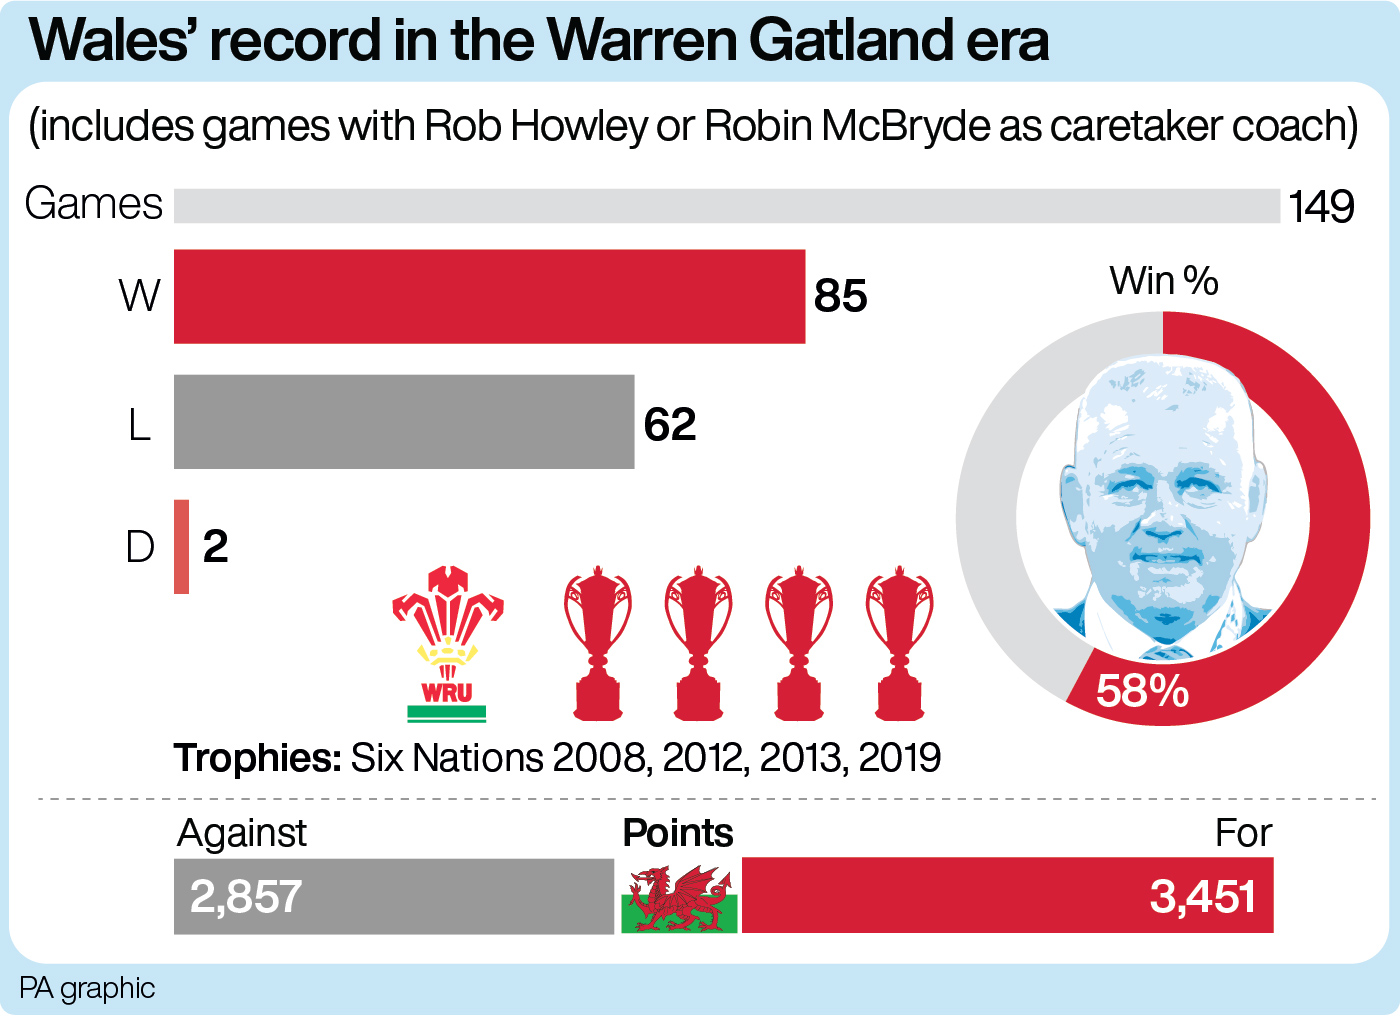 Wales' record in the Warren Gatland era